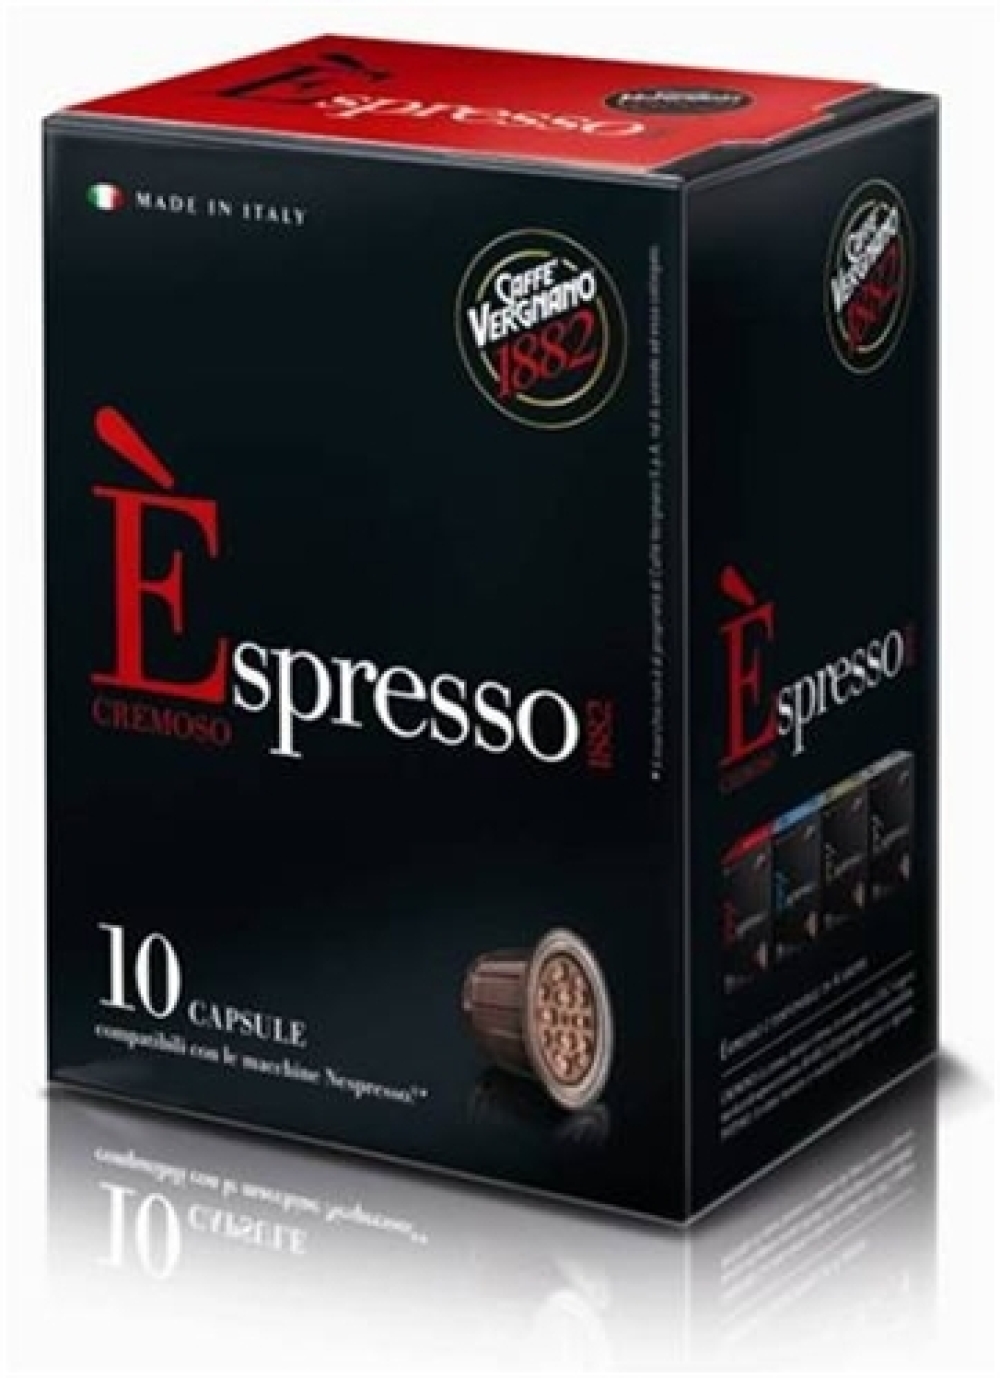 Espresso kapsler Cremoso 10 stk - Vergnano, 8001800005488, 764583006285, Kaffe, kapsler, Casa del Caffe Vergnano Spa, 10 Caps Espr Cremoso, 628, Til espresso, capuccino latte og americano